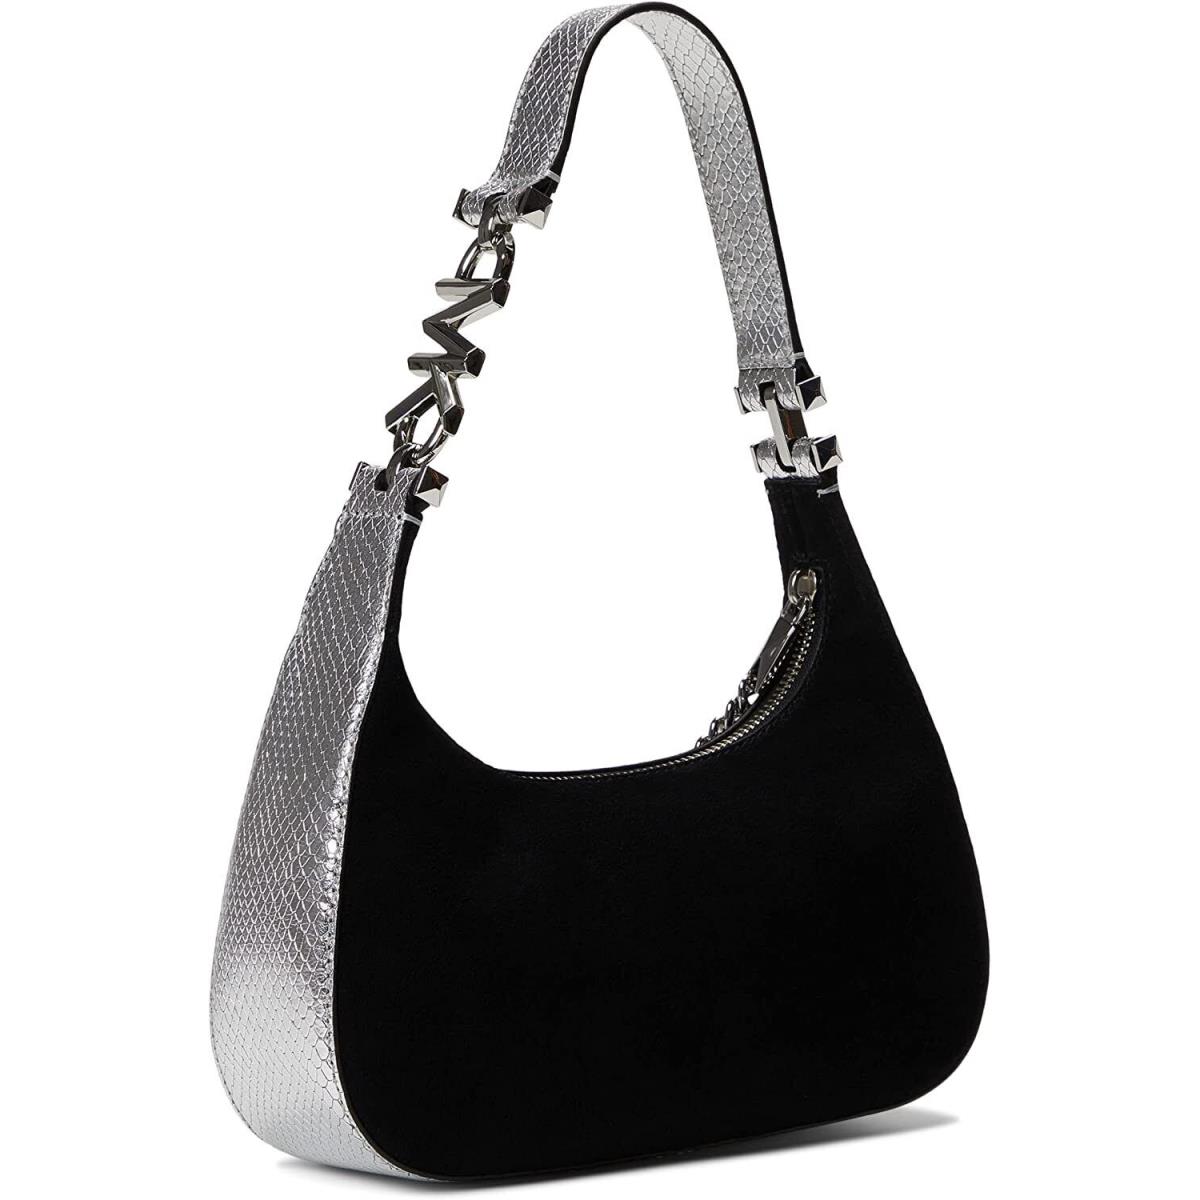 Michael Kors Women Shoulder Bag Pouchette Piper Sm Leather Suede Black Silver OS